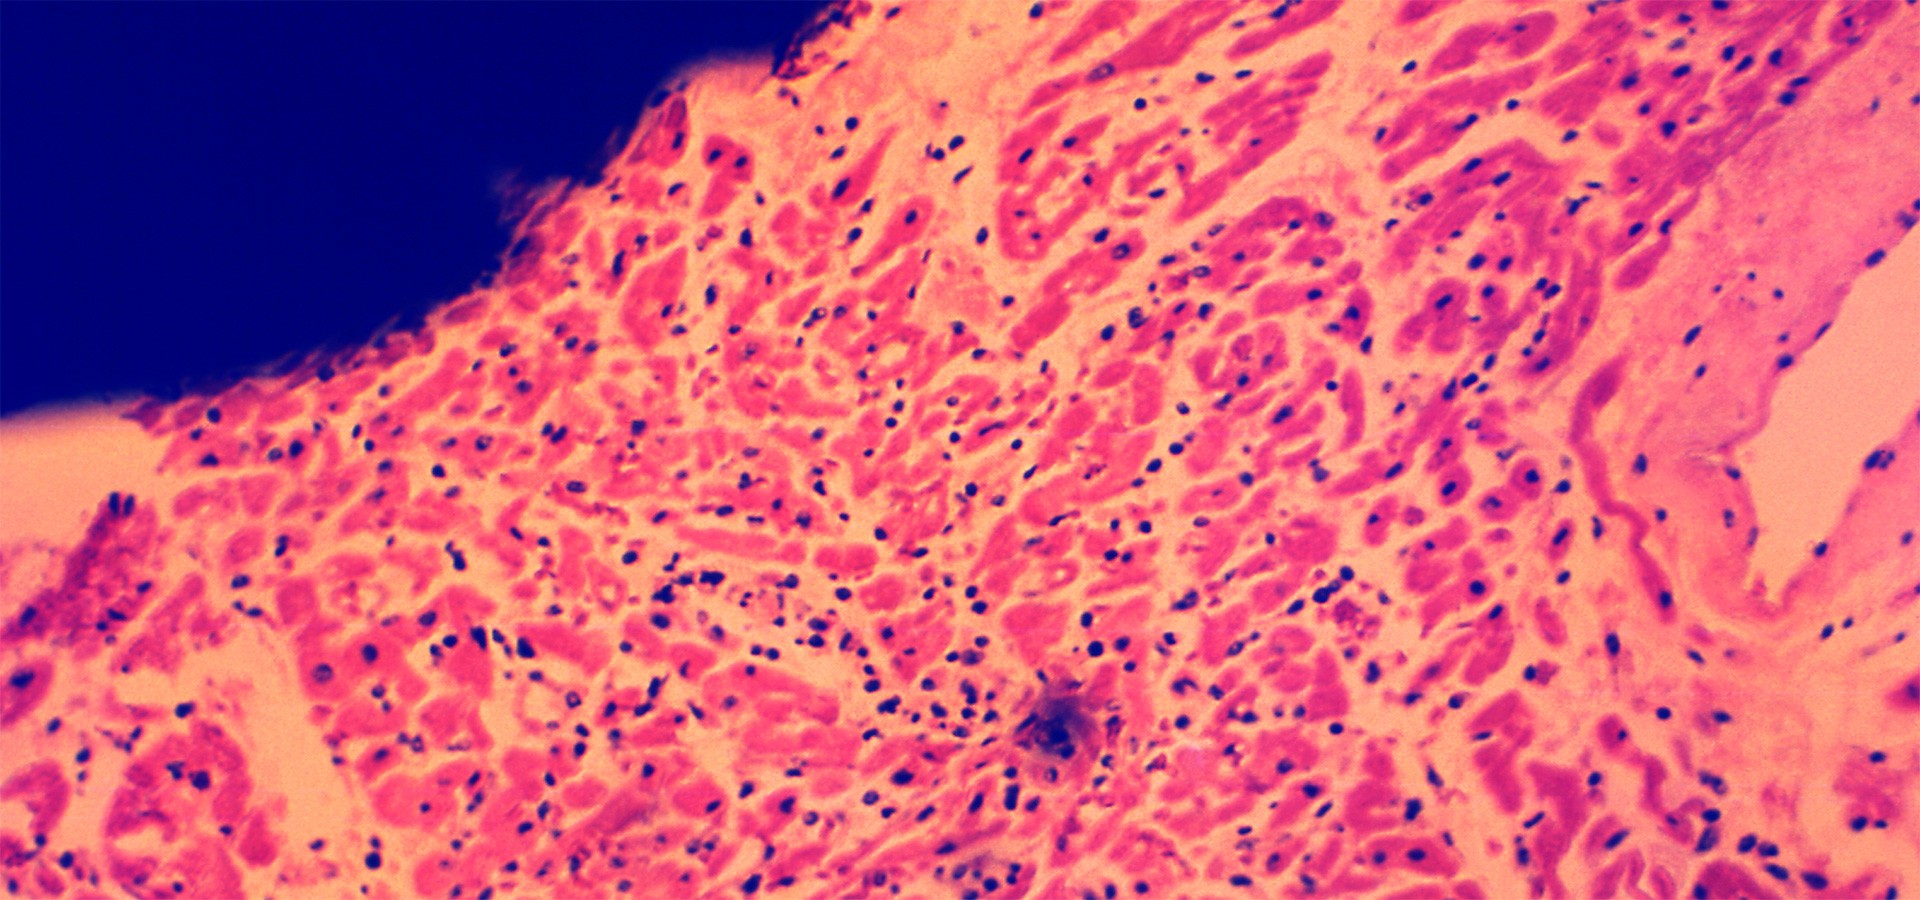 Myocardial tissue